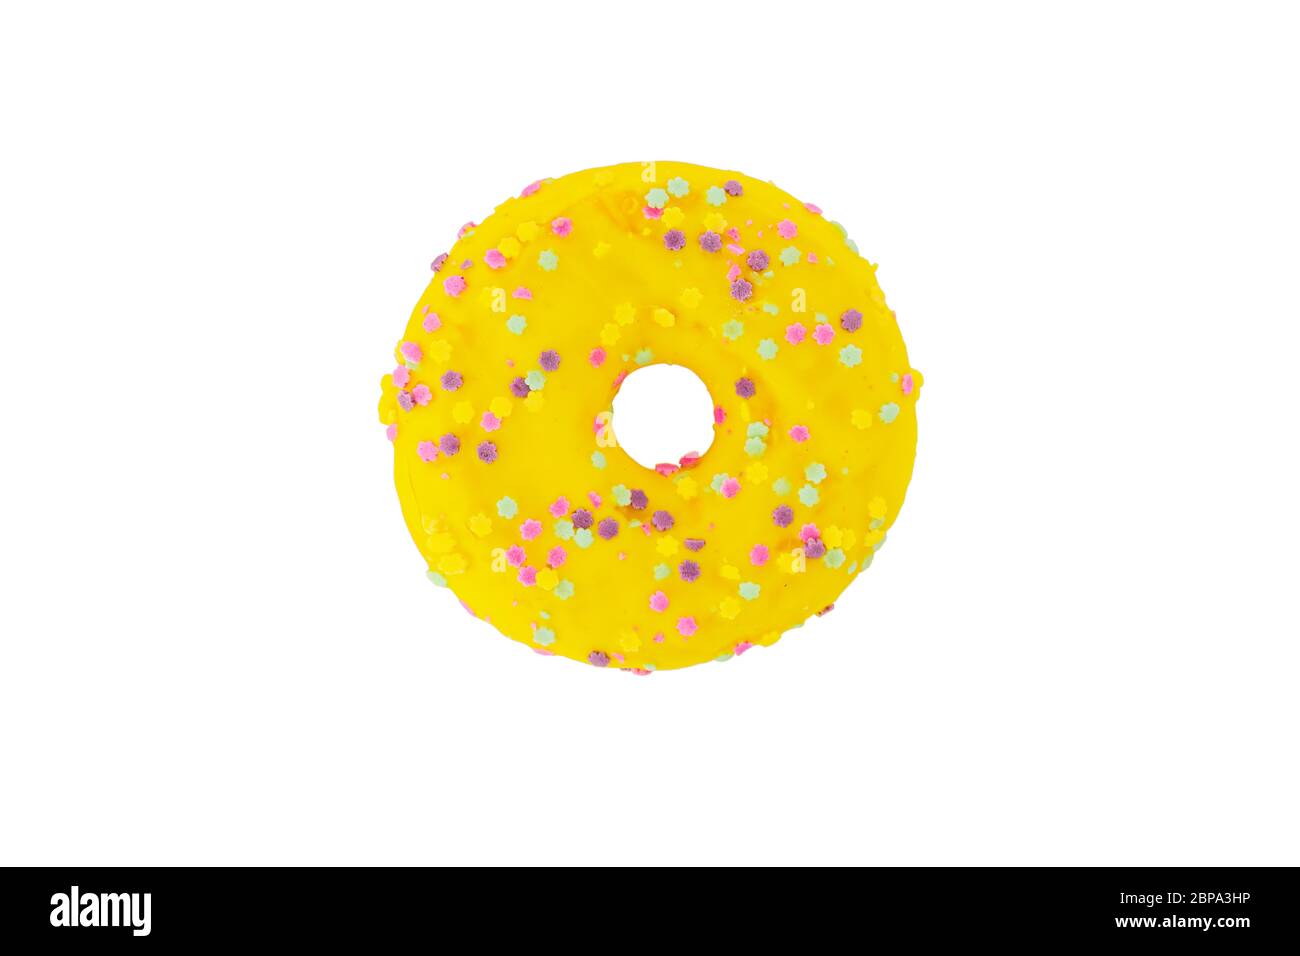 Yummy yellow donut isolated on white background. Stock Photo